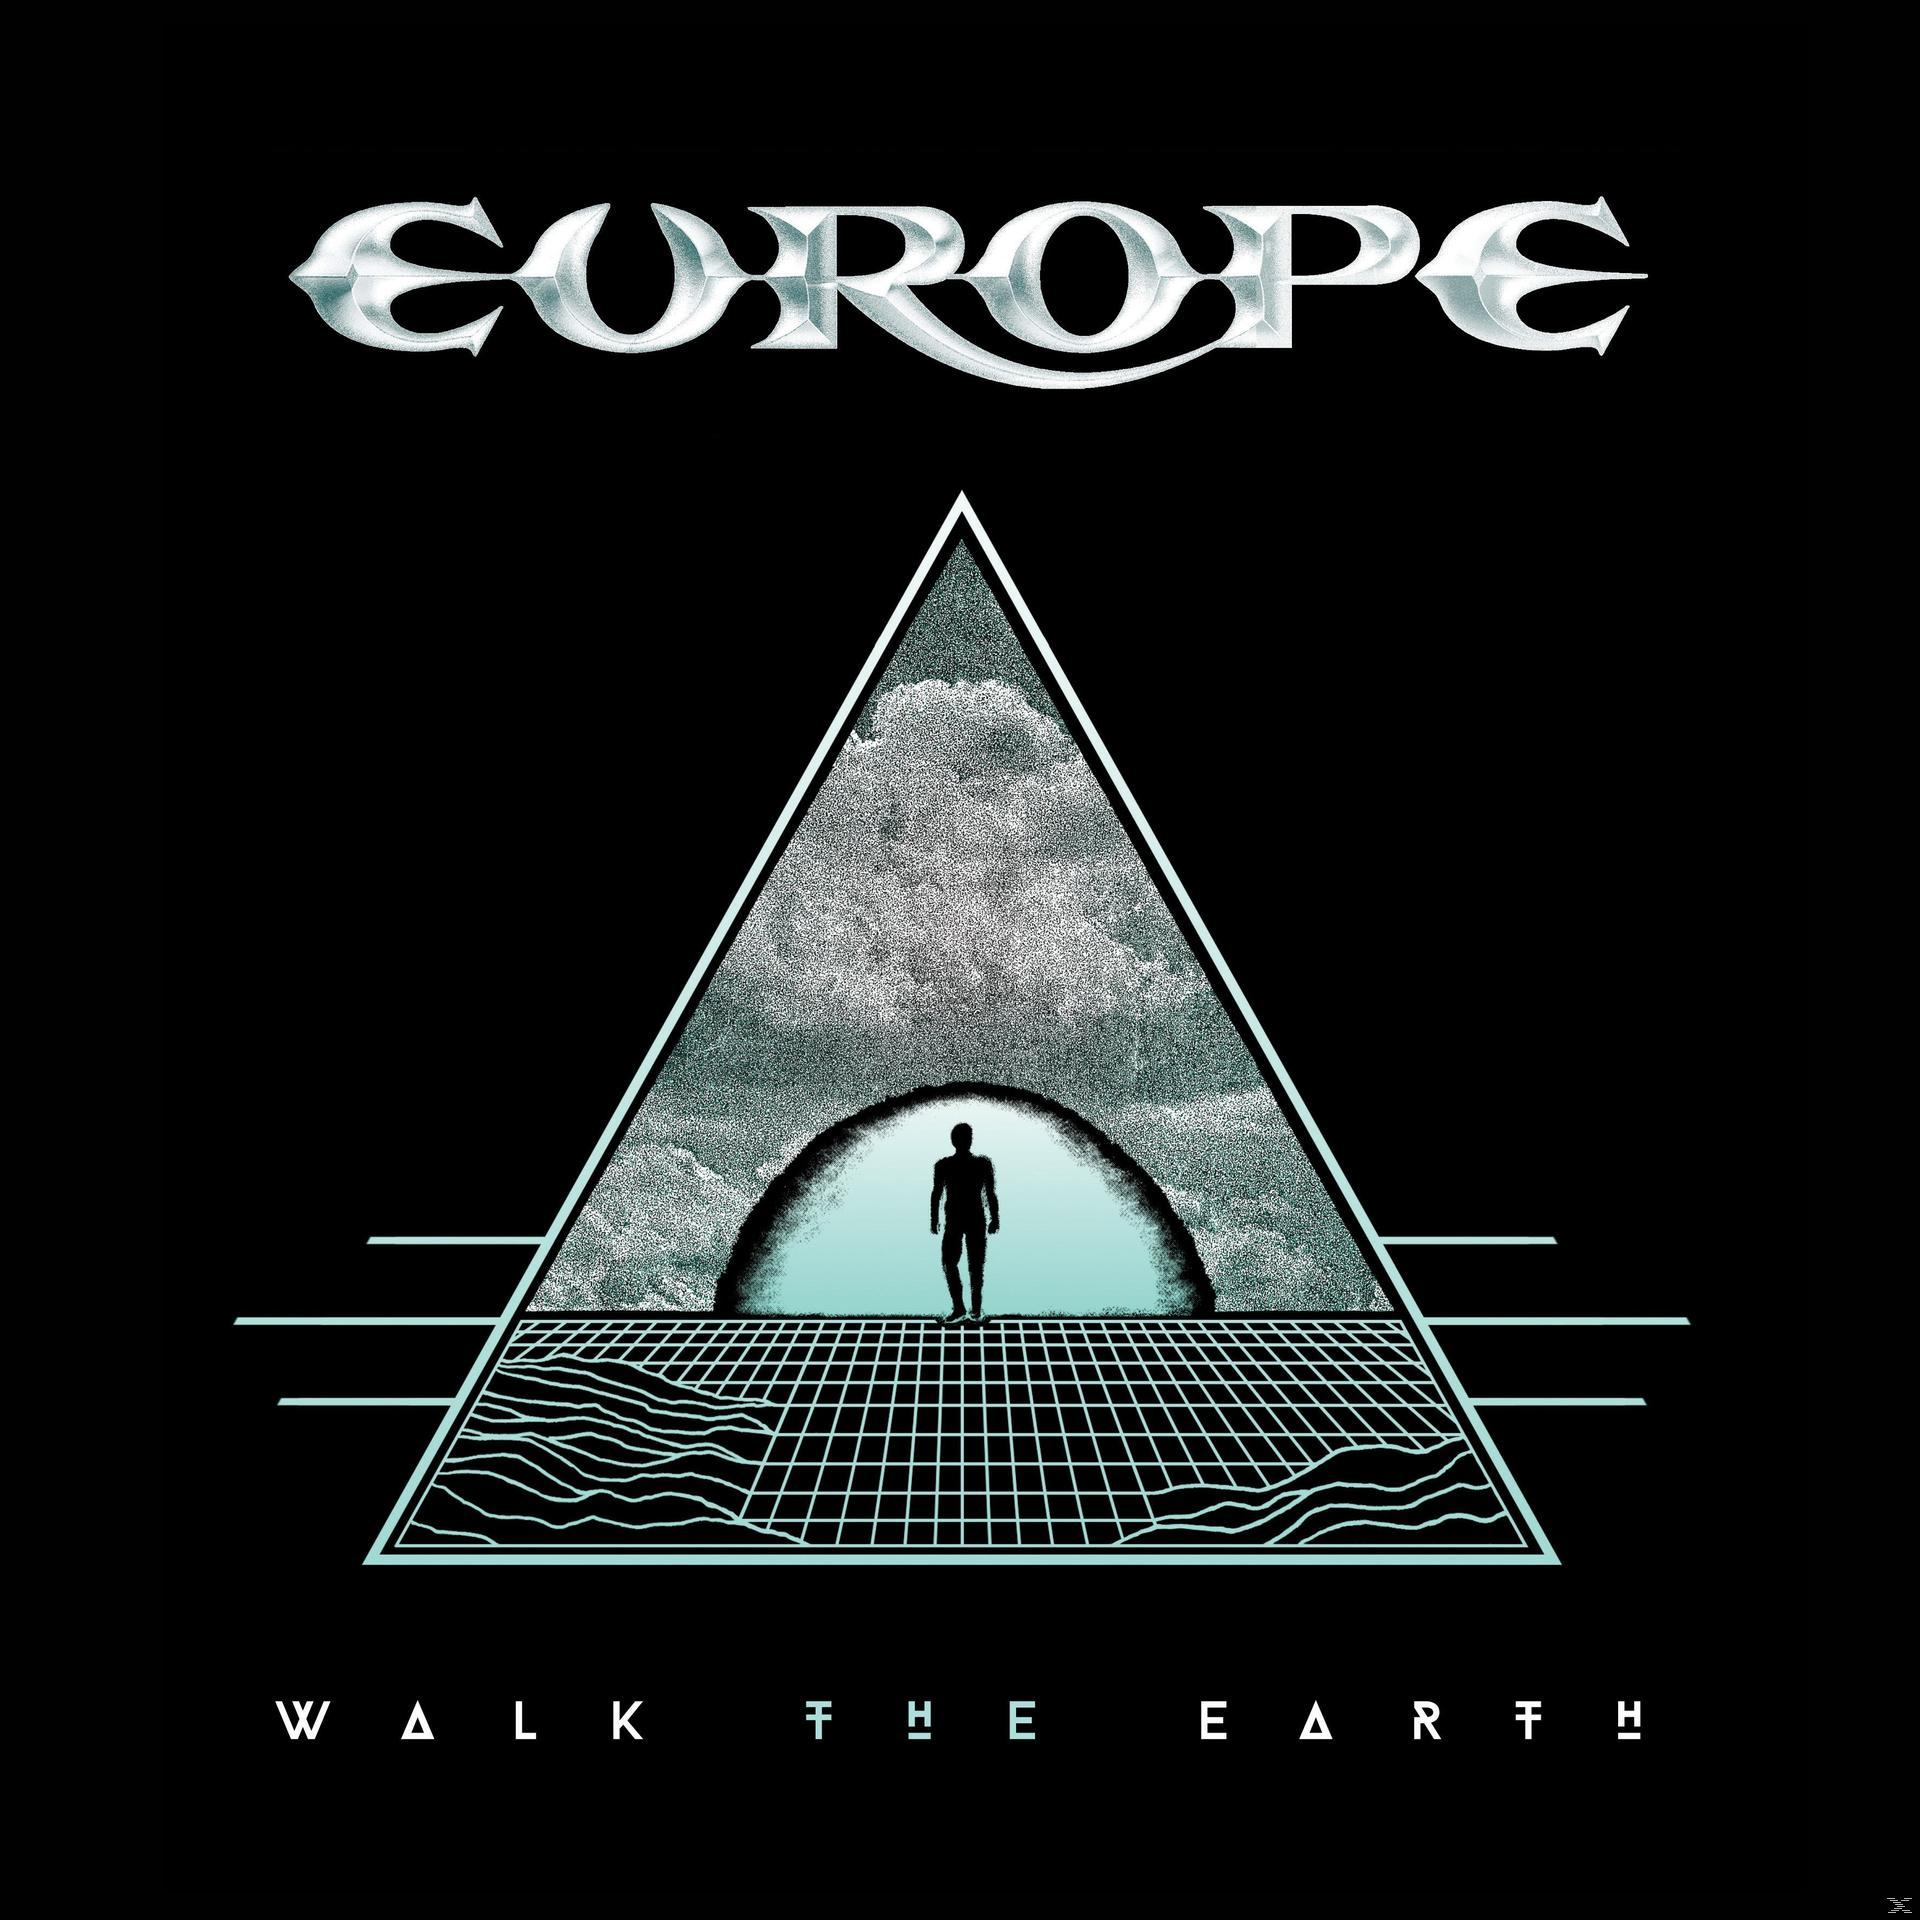 Walk Europe Earth - The (Vinyl) -